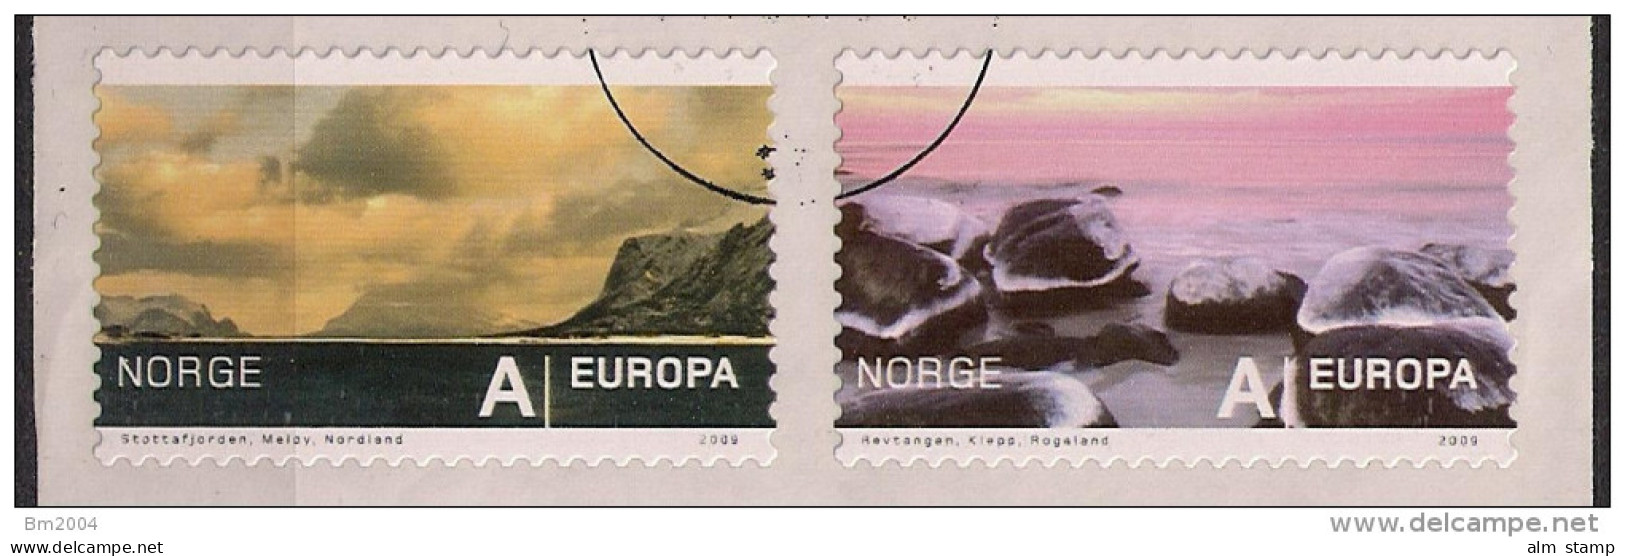 2009 Norwegen Mi. 1680-85 Used Tourismus - Used Stamps